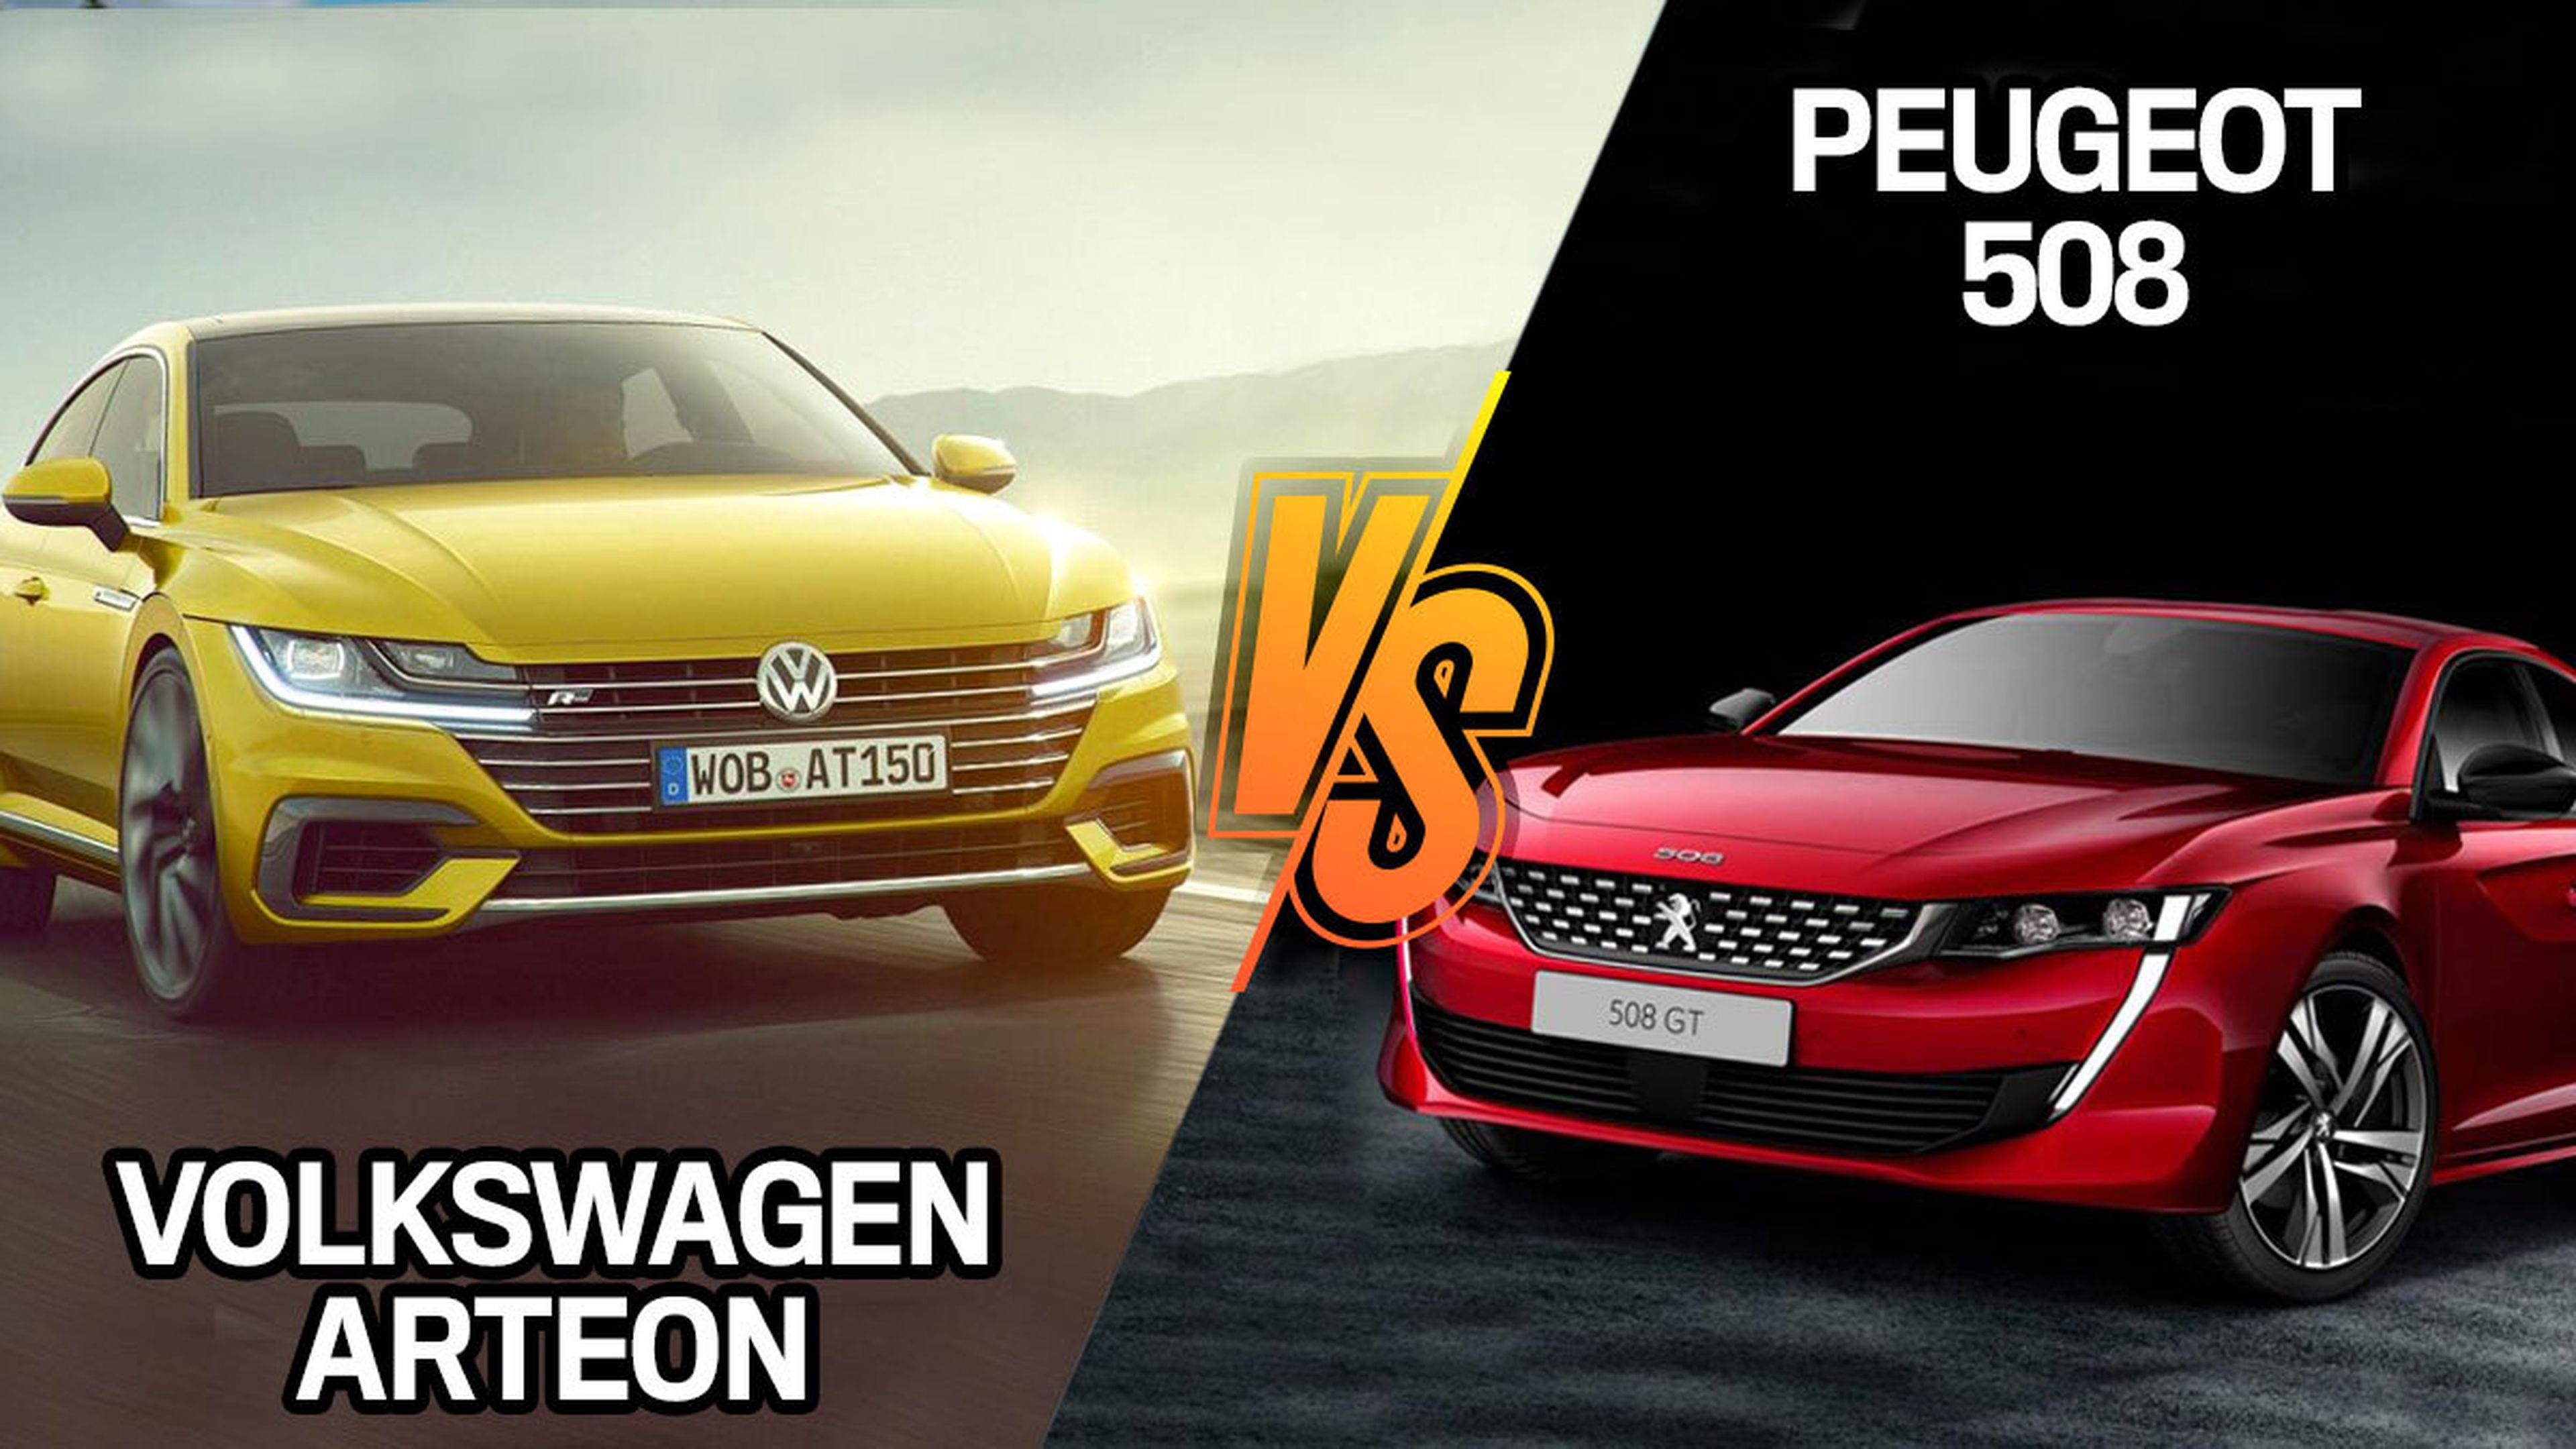 Peugeot 508 o VW Arteon, ¿cuál comprar?